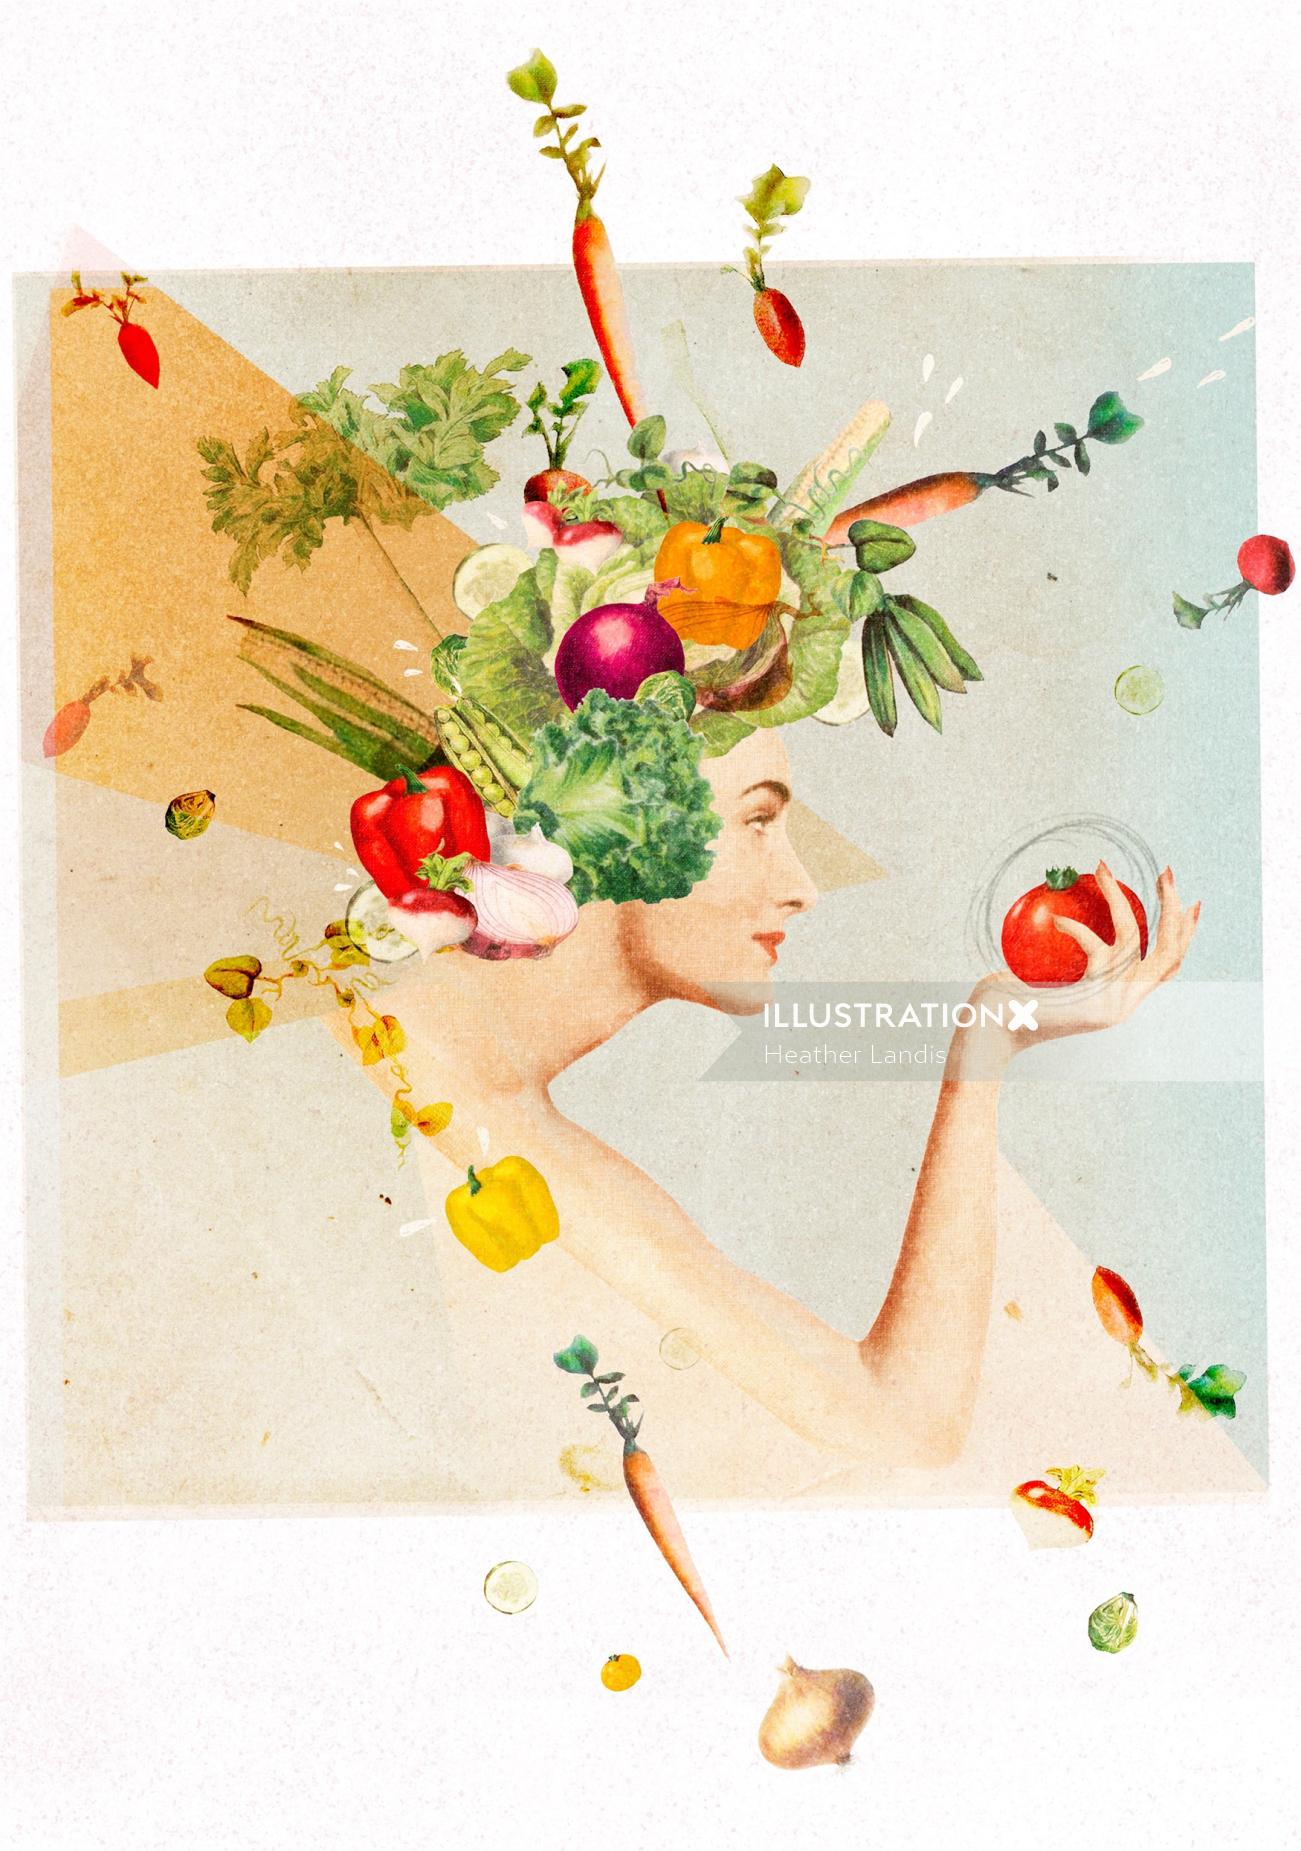 Healthy women illustration for women's health magazine 